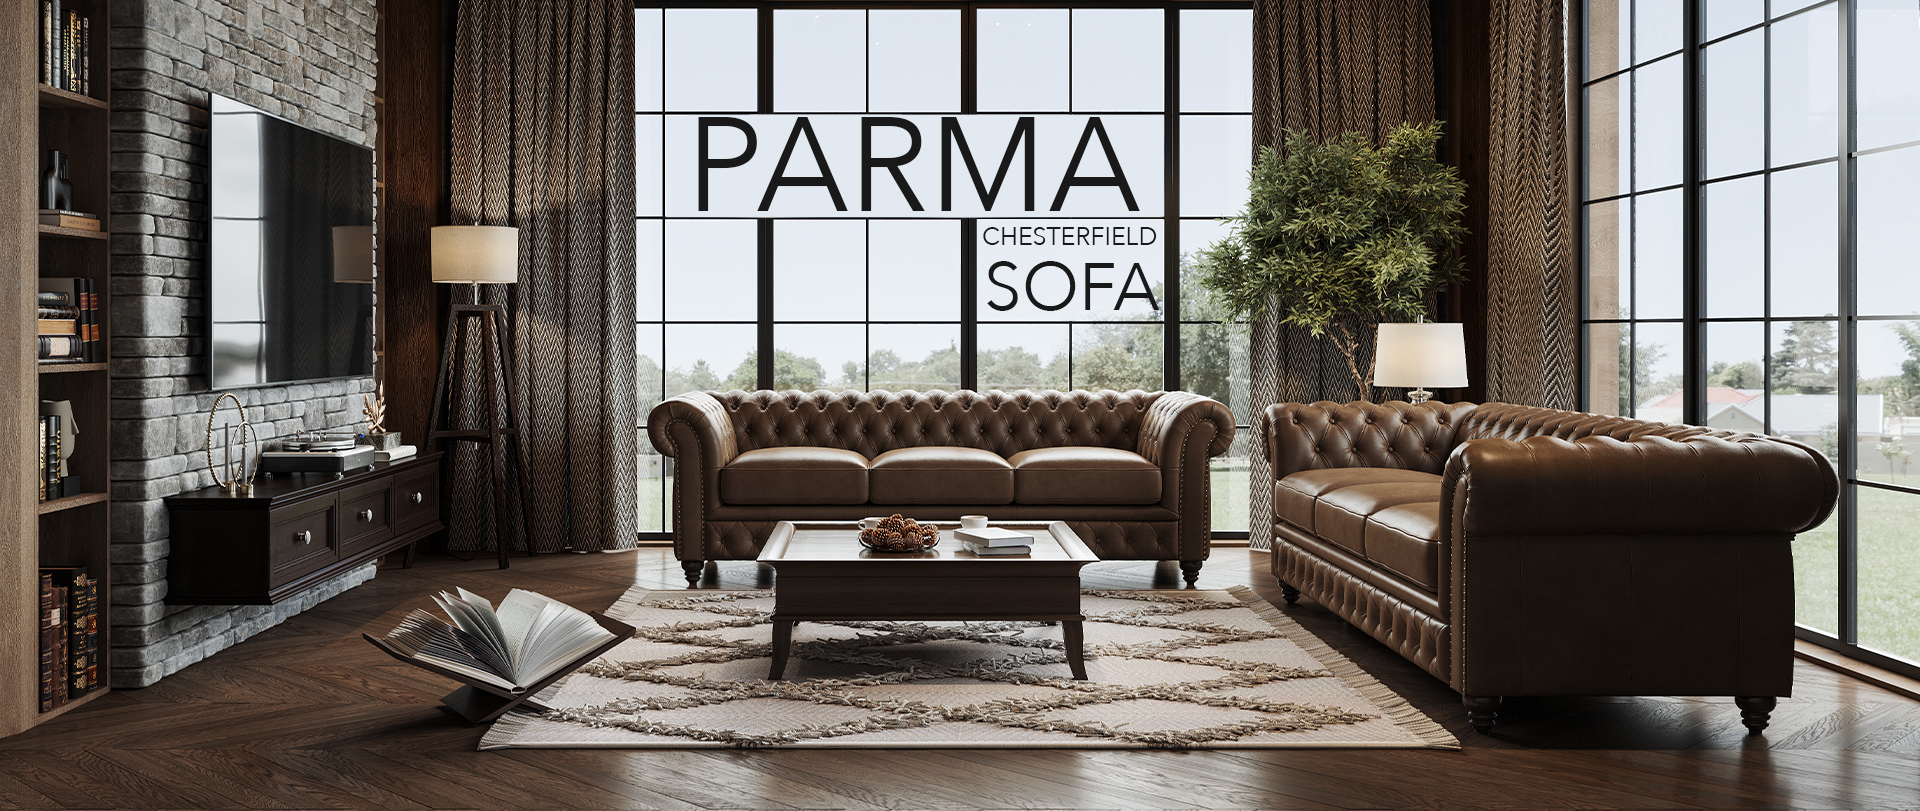 Parma Chesterfield Sofa